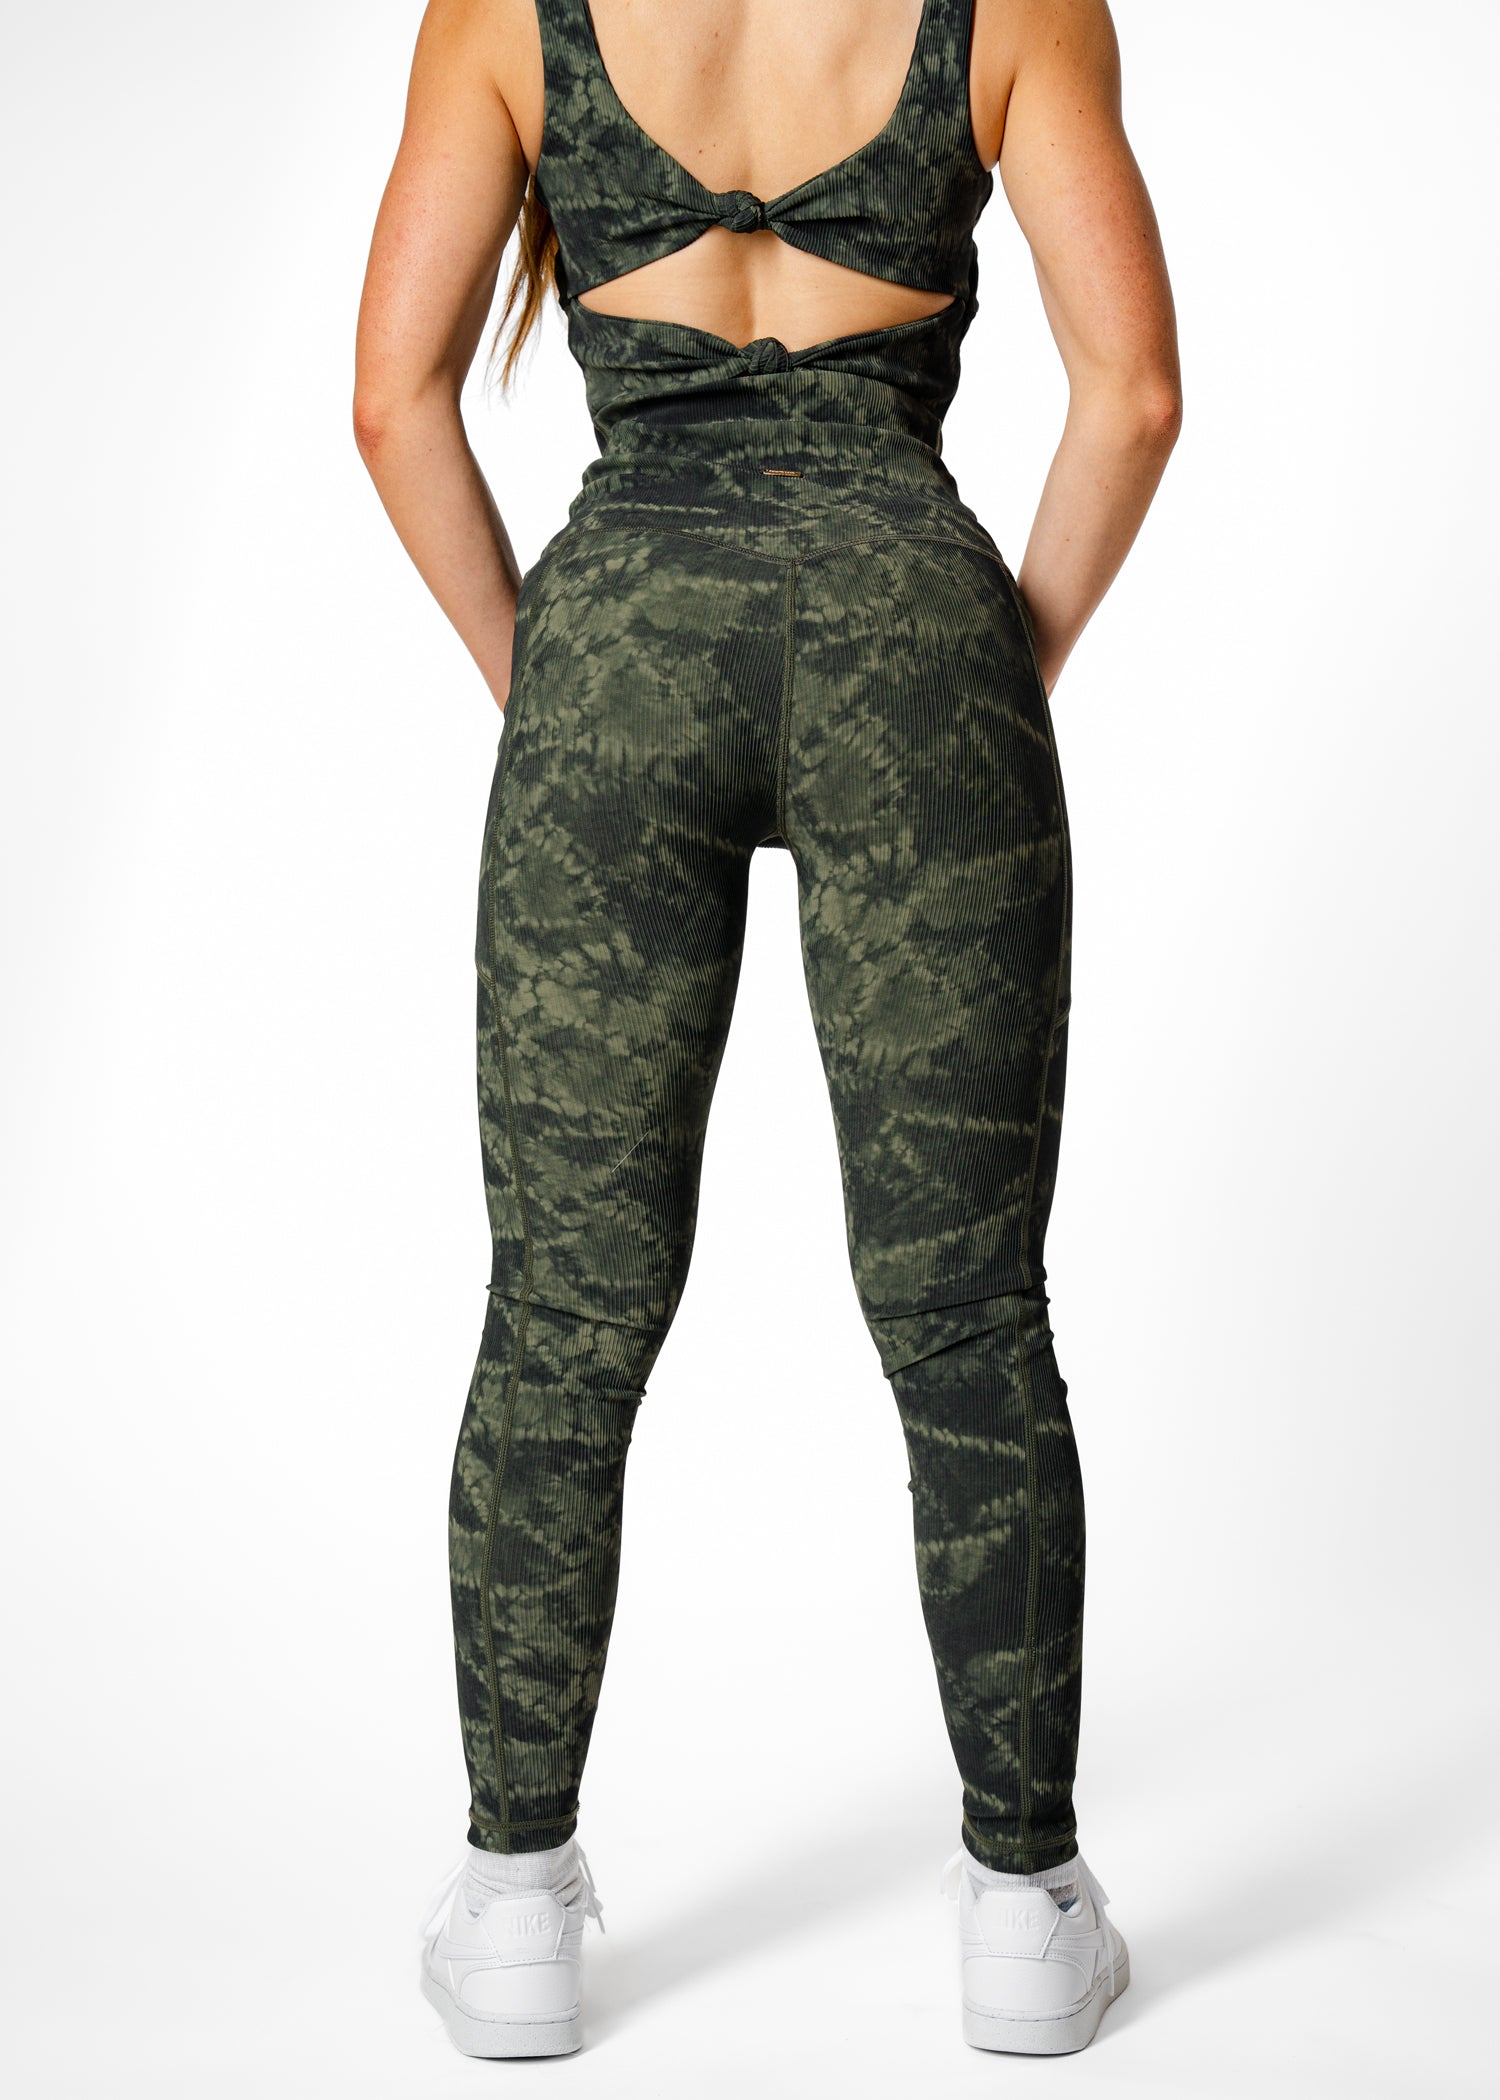 Nimble Lauren 7/8 Length Legging - Womens - Jungle Leaf Print - Dancewear  Centre